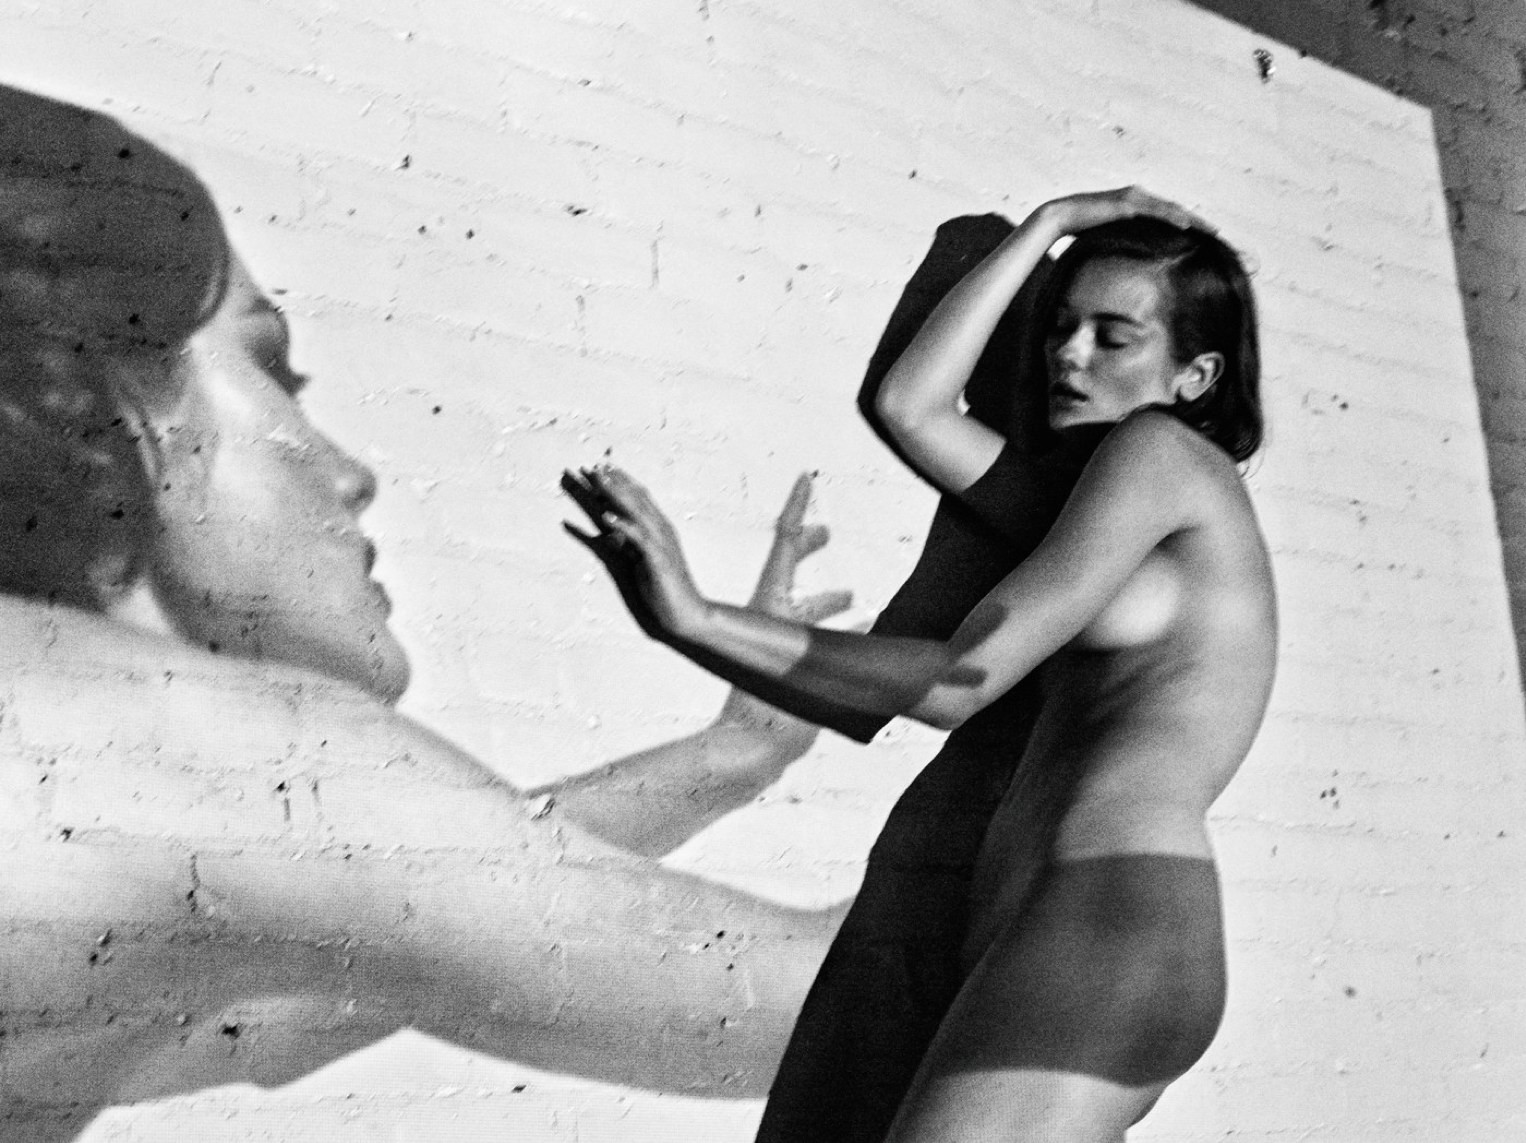 Monika jagaciak entièrement nue dans un photoshoot johan lindeberg 2015
 #75160781